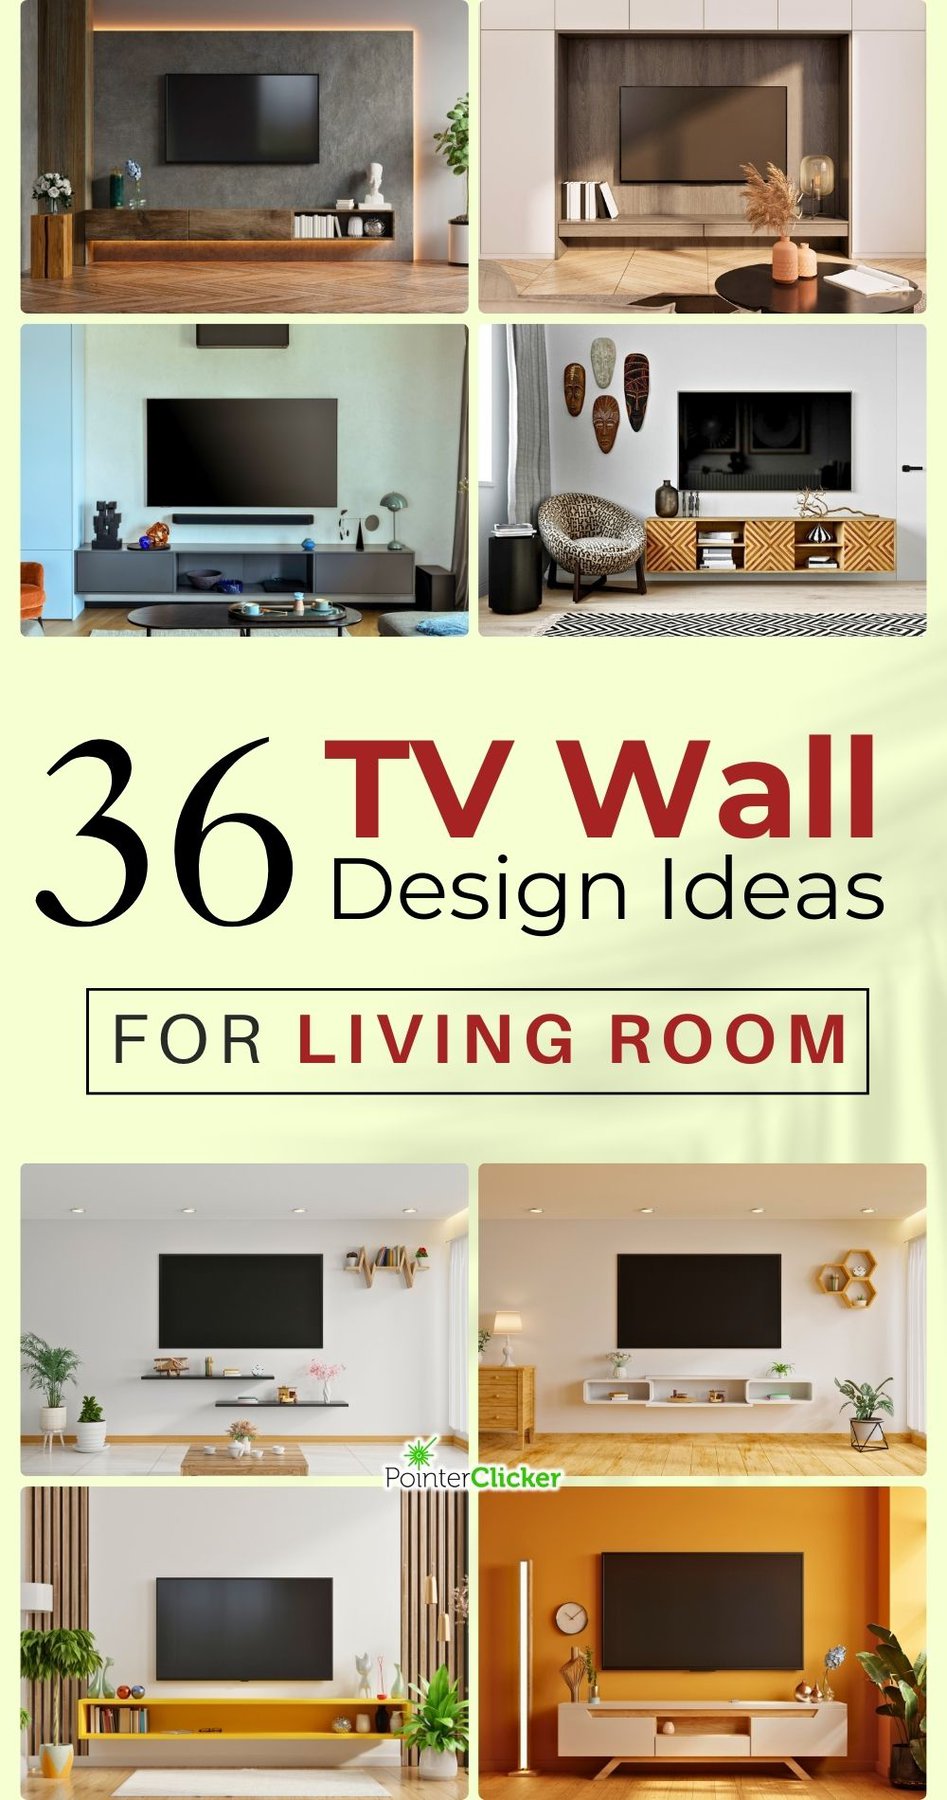 36 TV wall design ideas for living room